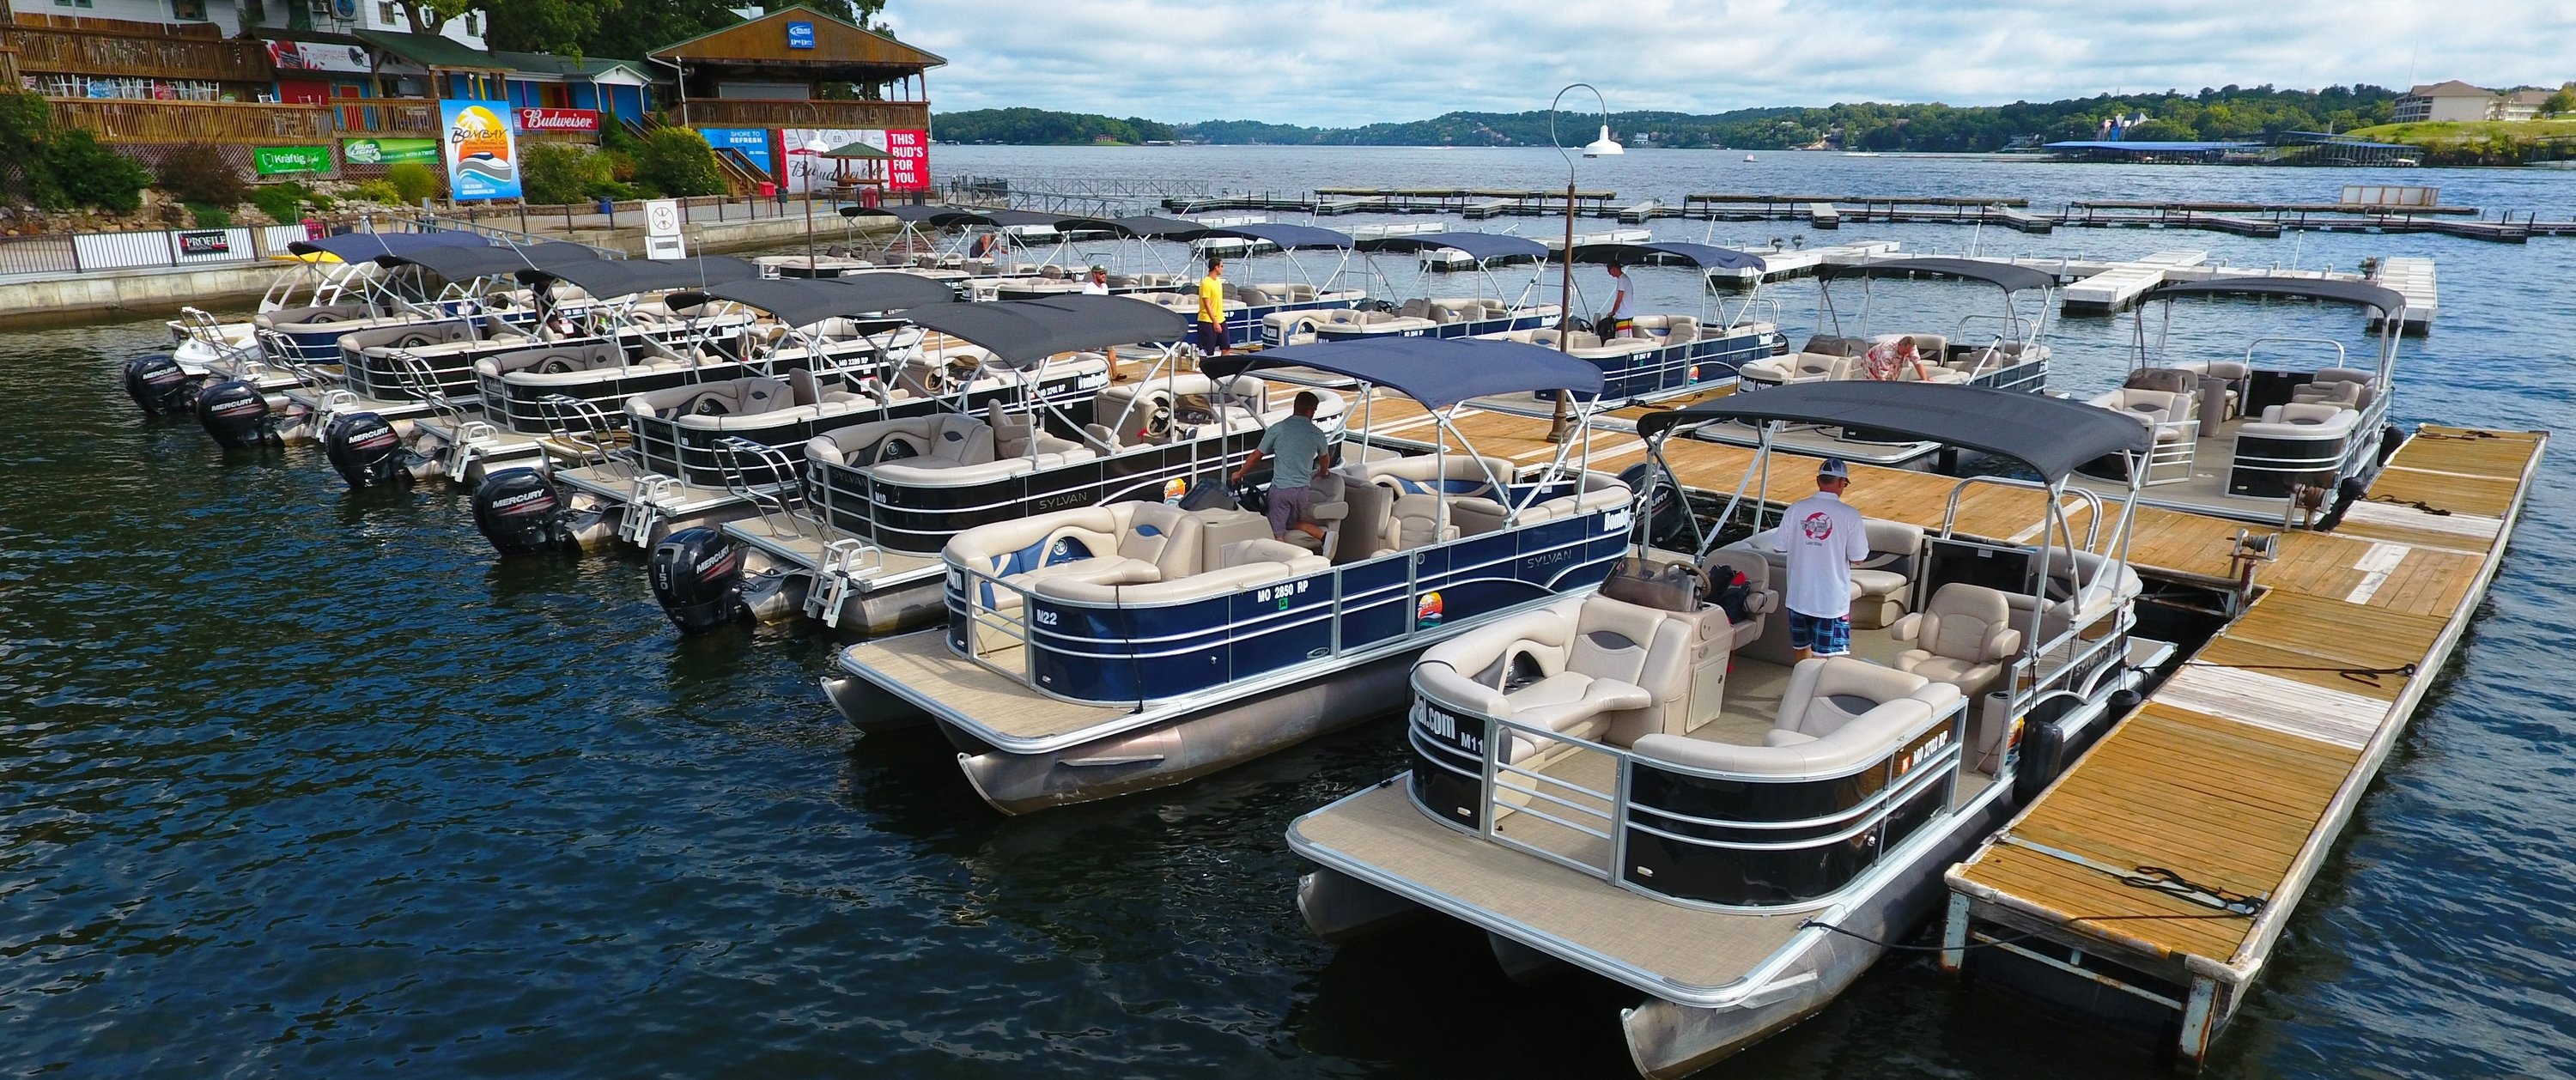 bombay boat rentals lake of the ozarks